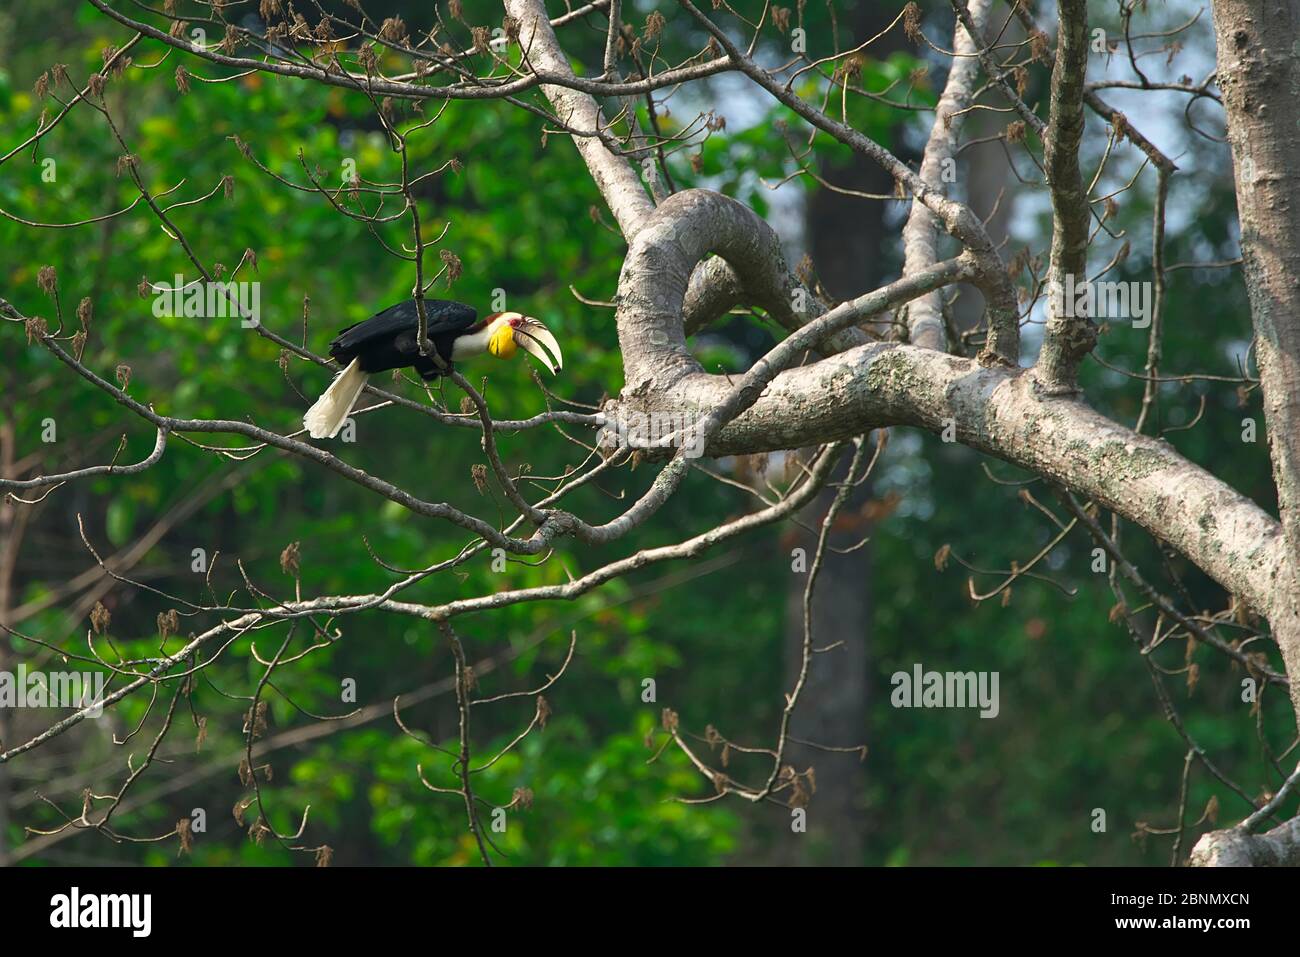 Wreathed hornbill (Aceros undulatus) feeding, Yingjiang County, Dehong Prefecture, Yunnan Province, China. Stock Photo